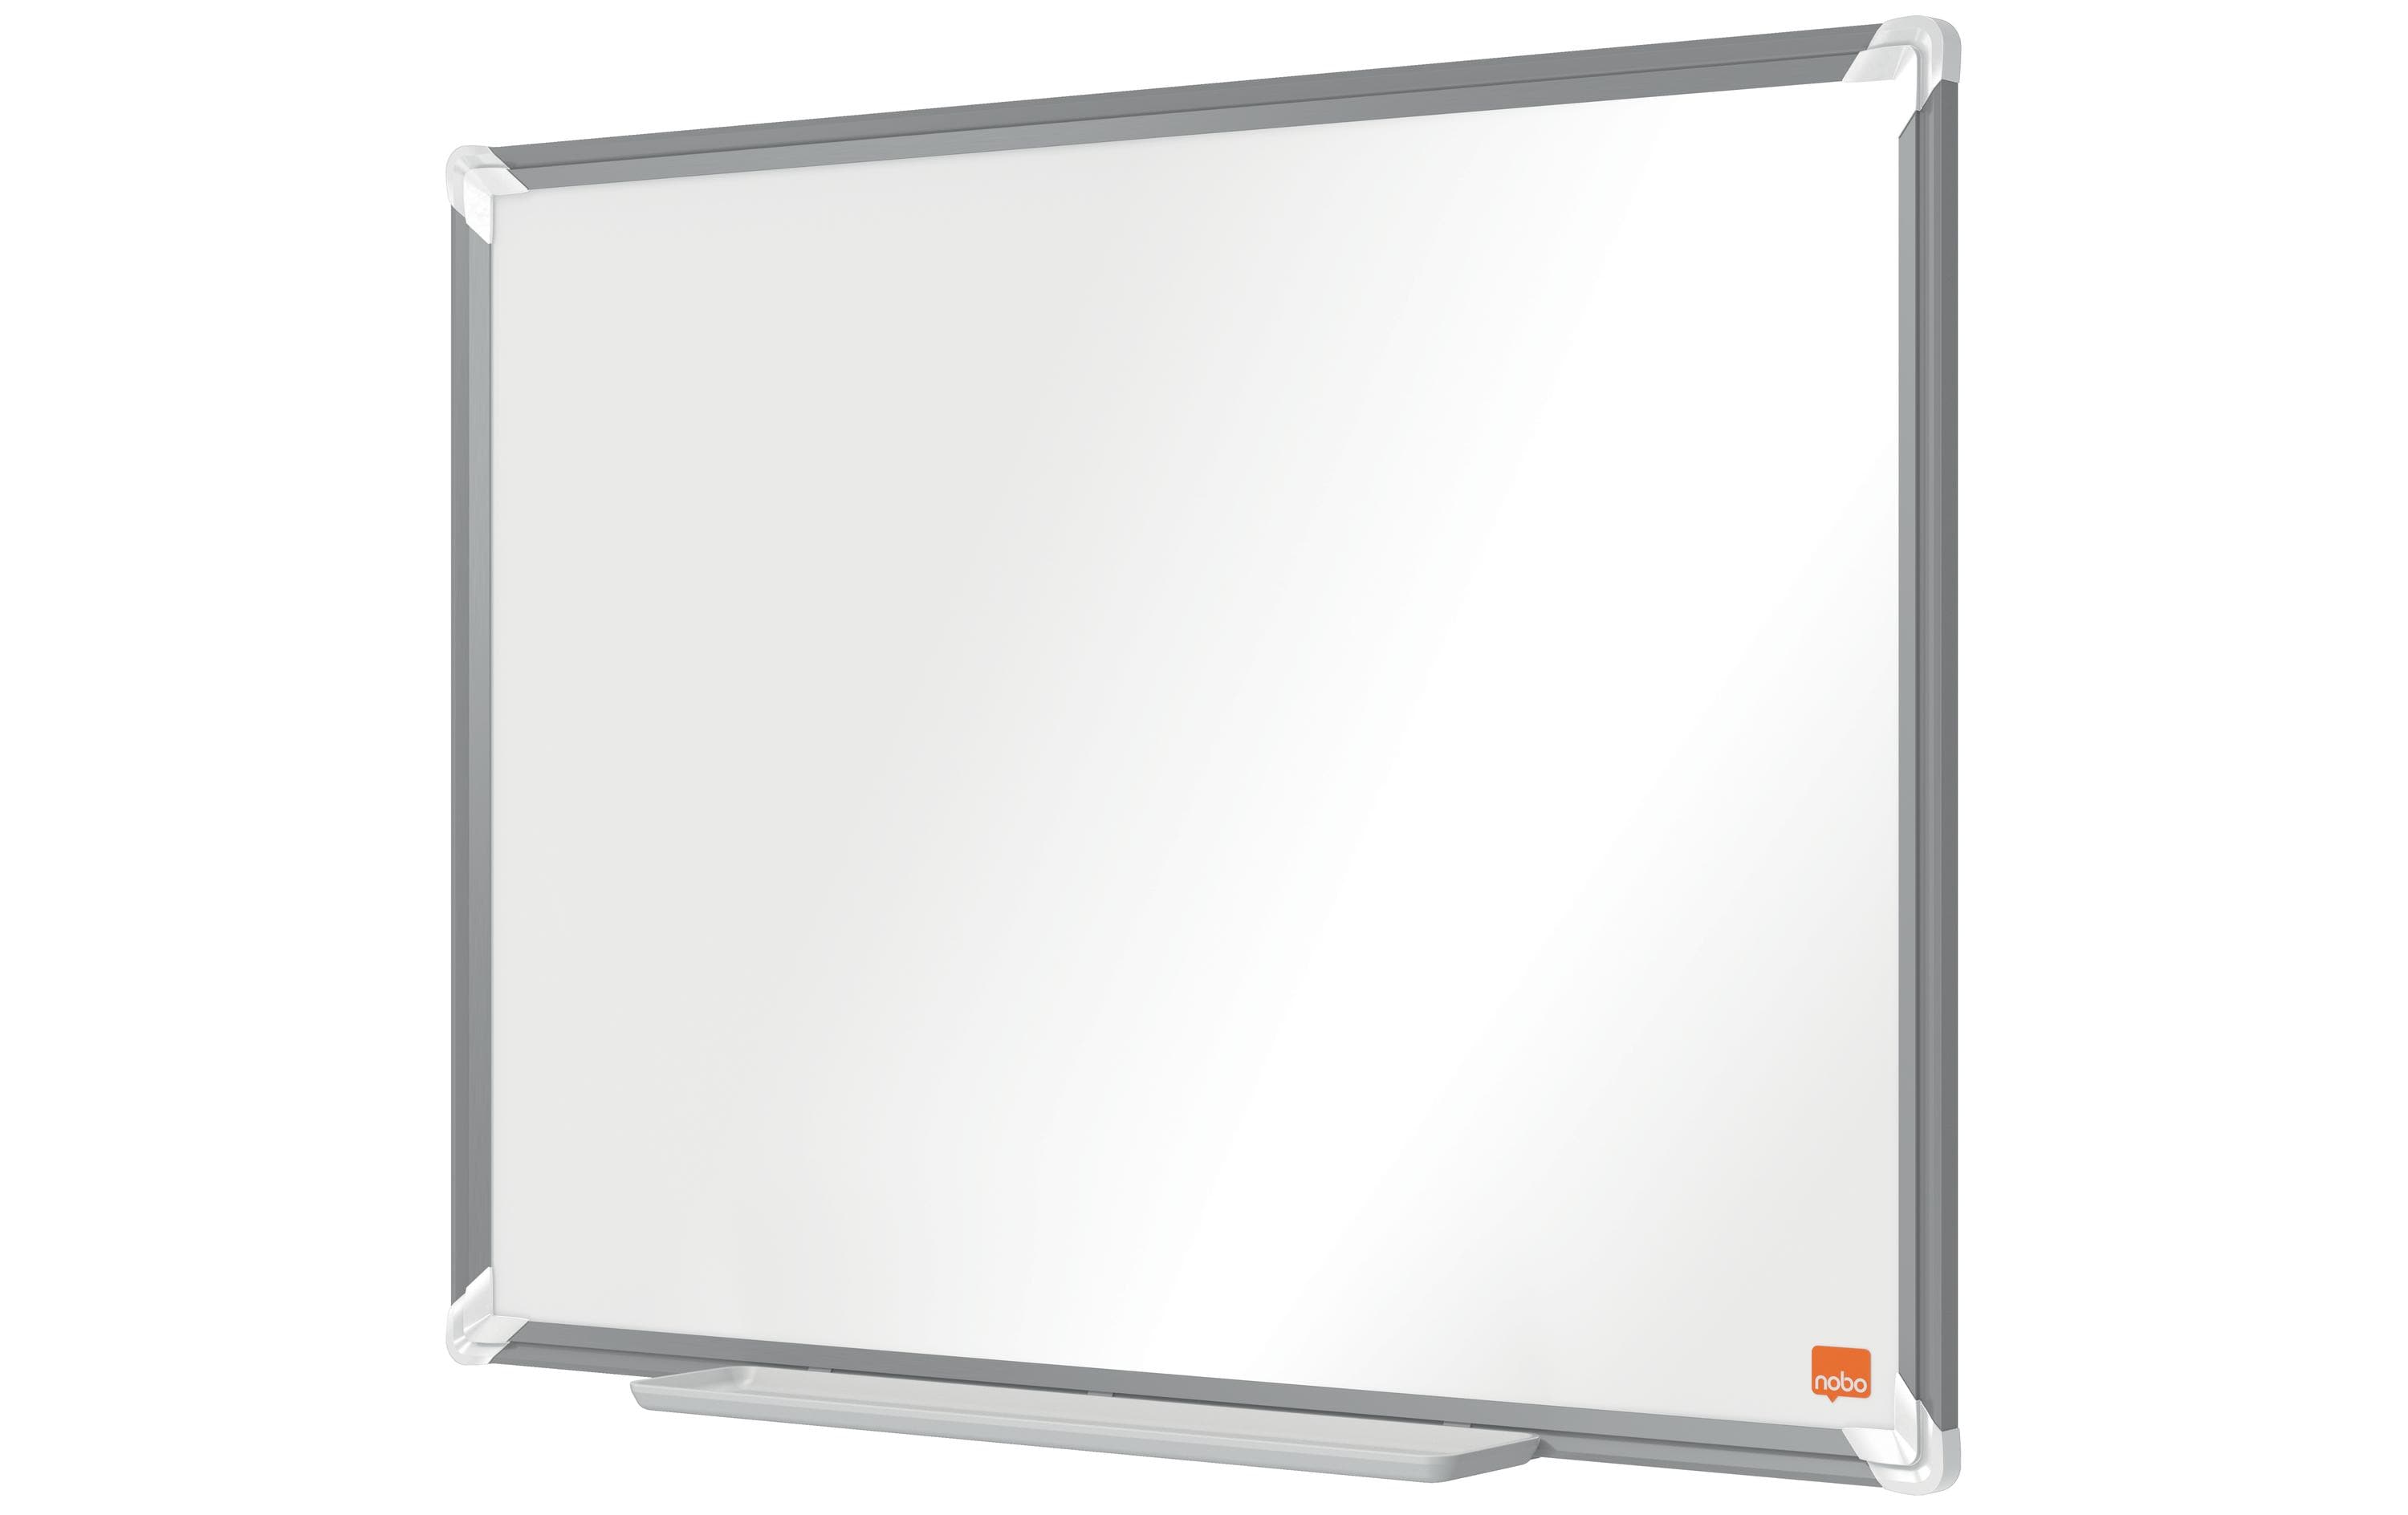 Nobo Whiteboard Premium Plus 120 cm x 150 cm, Weiss